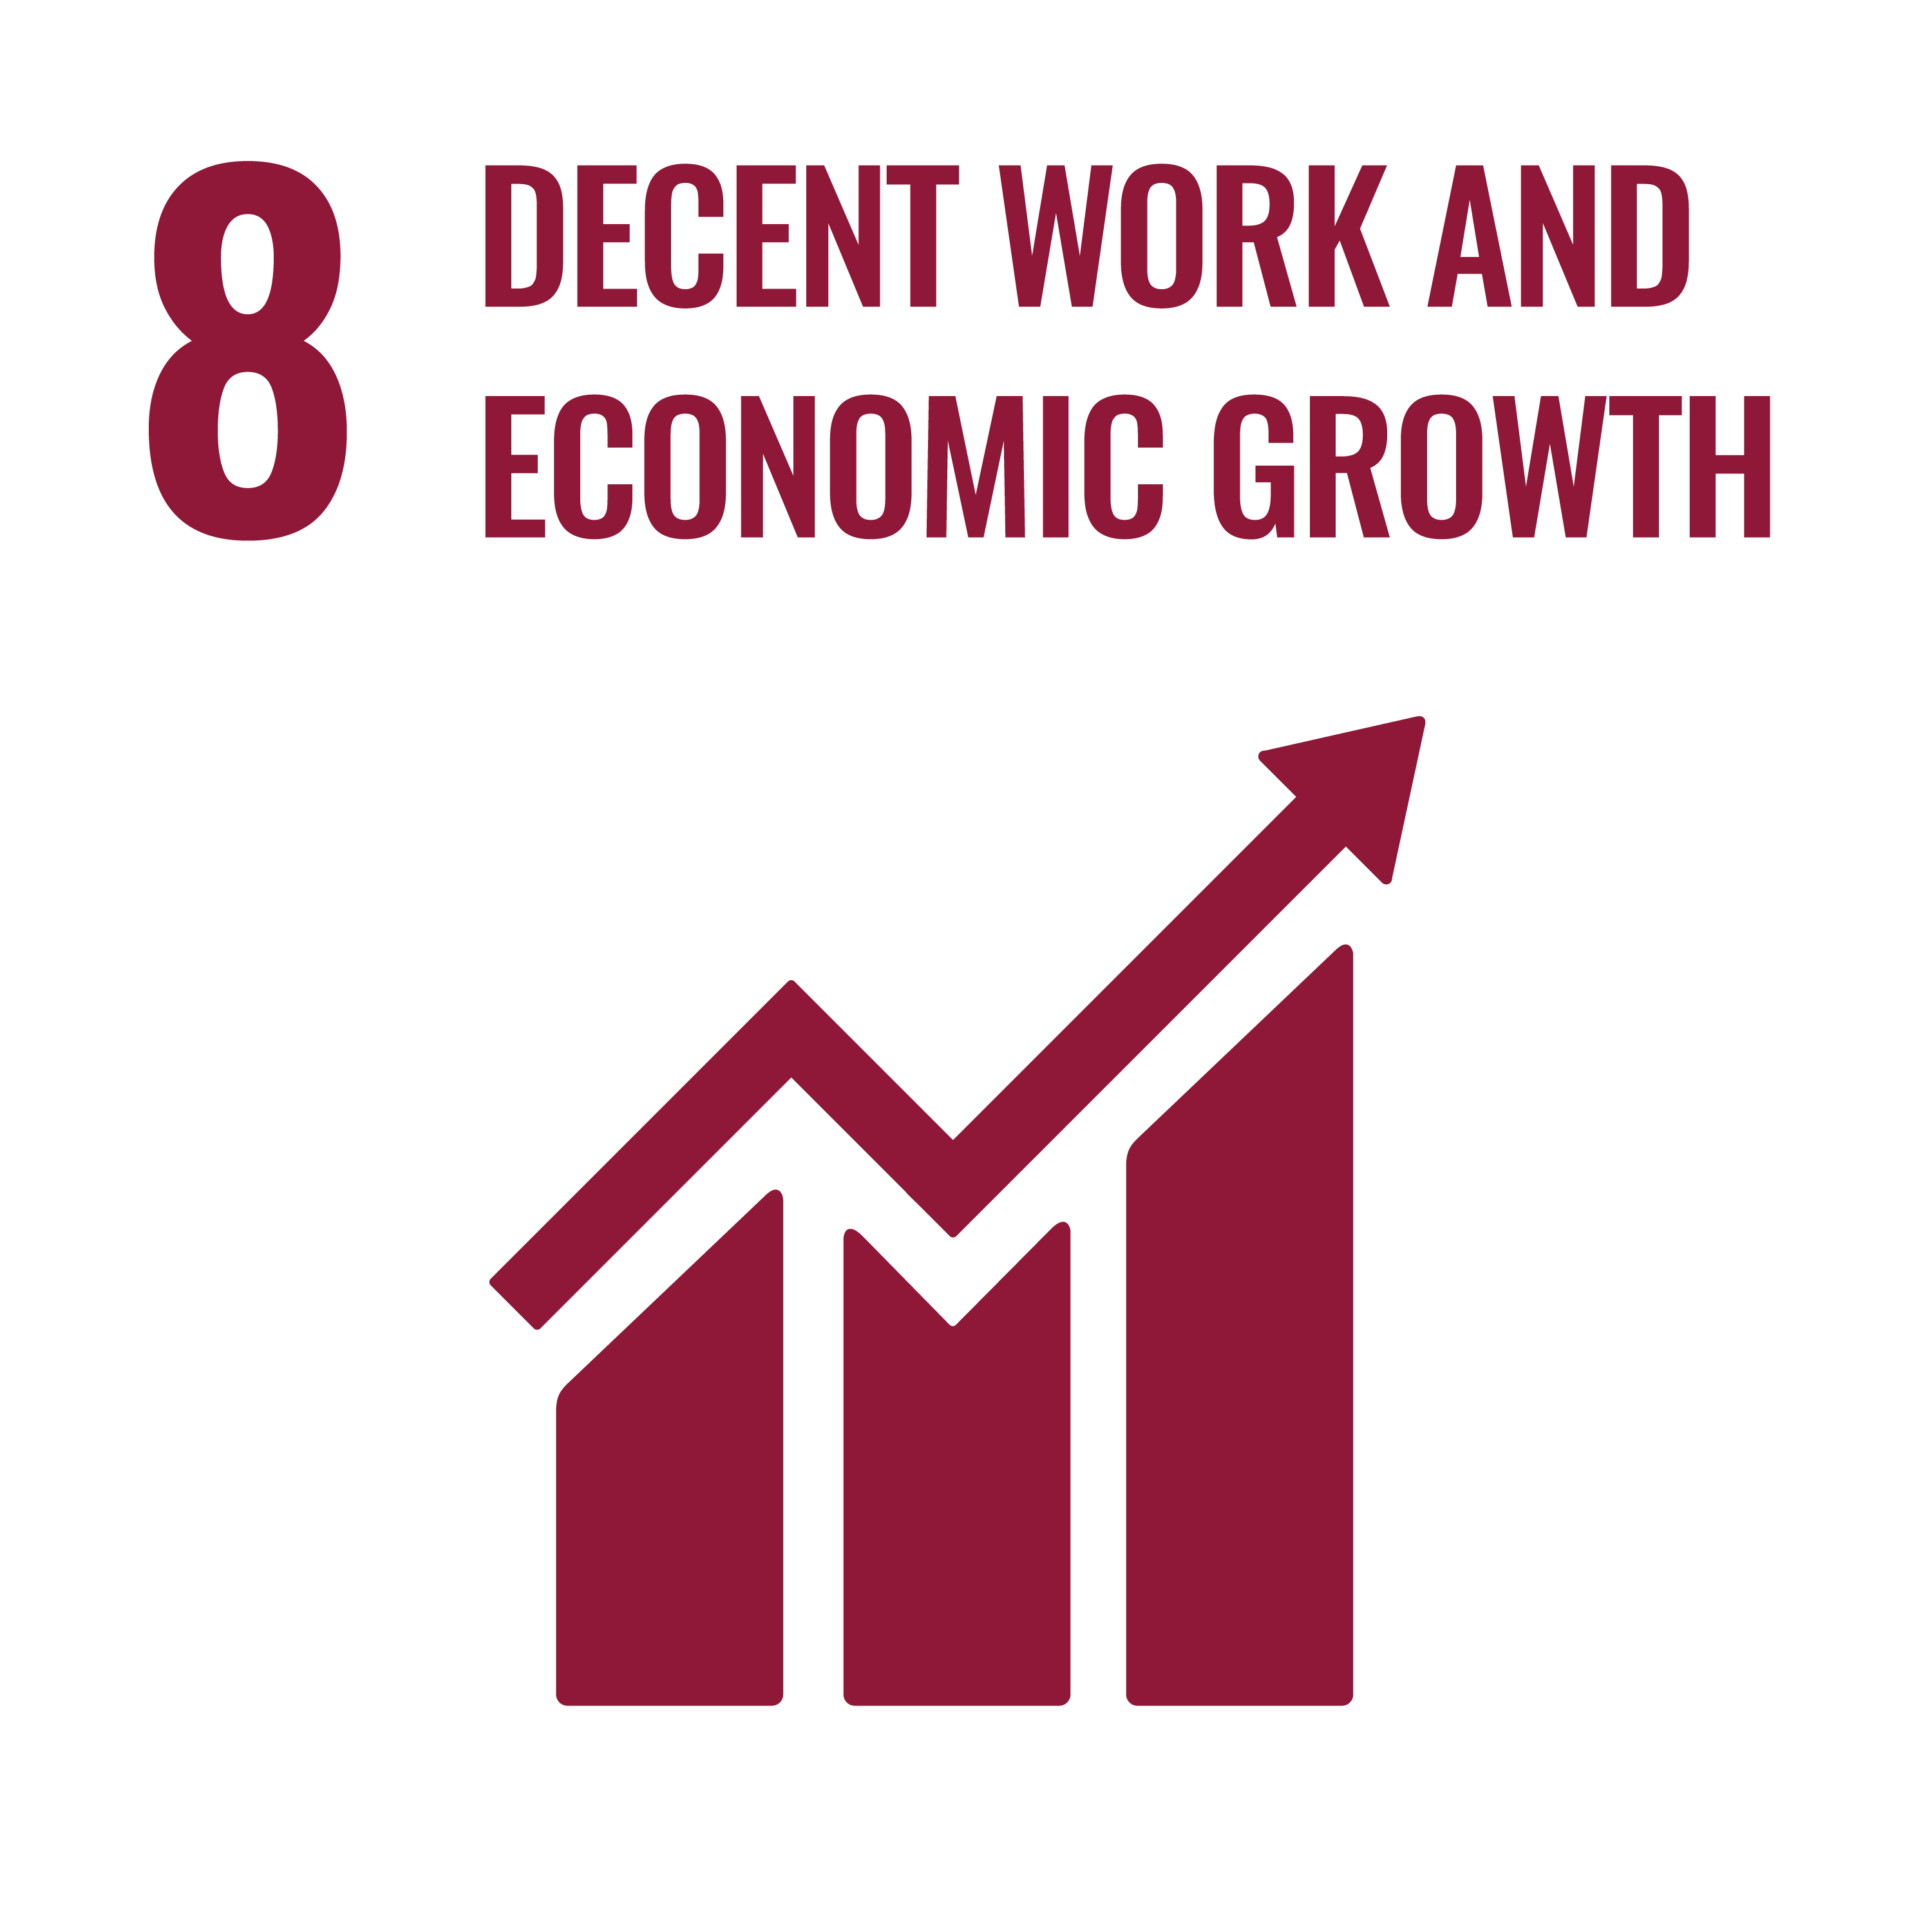 Sustainable development goal 8 - logo